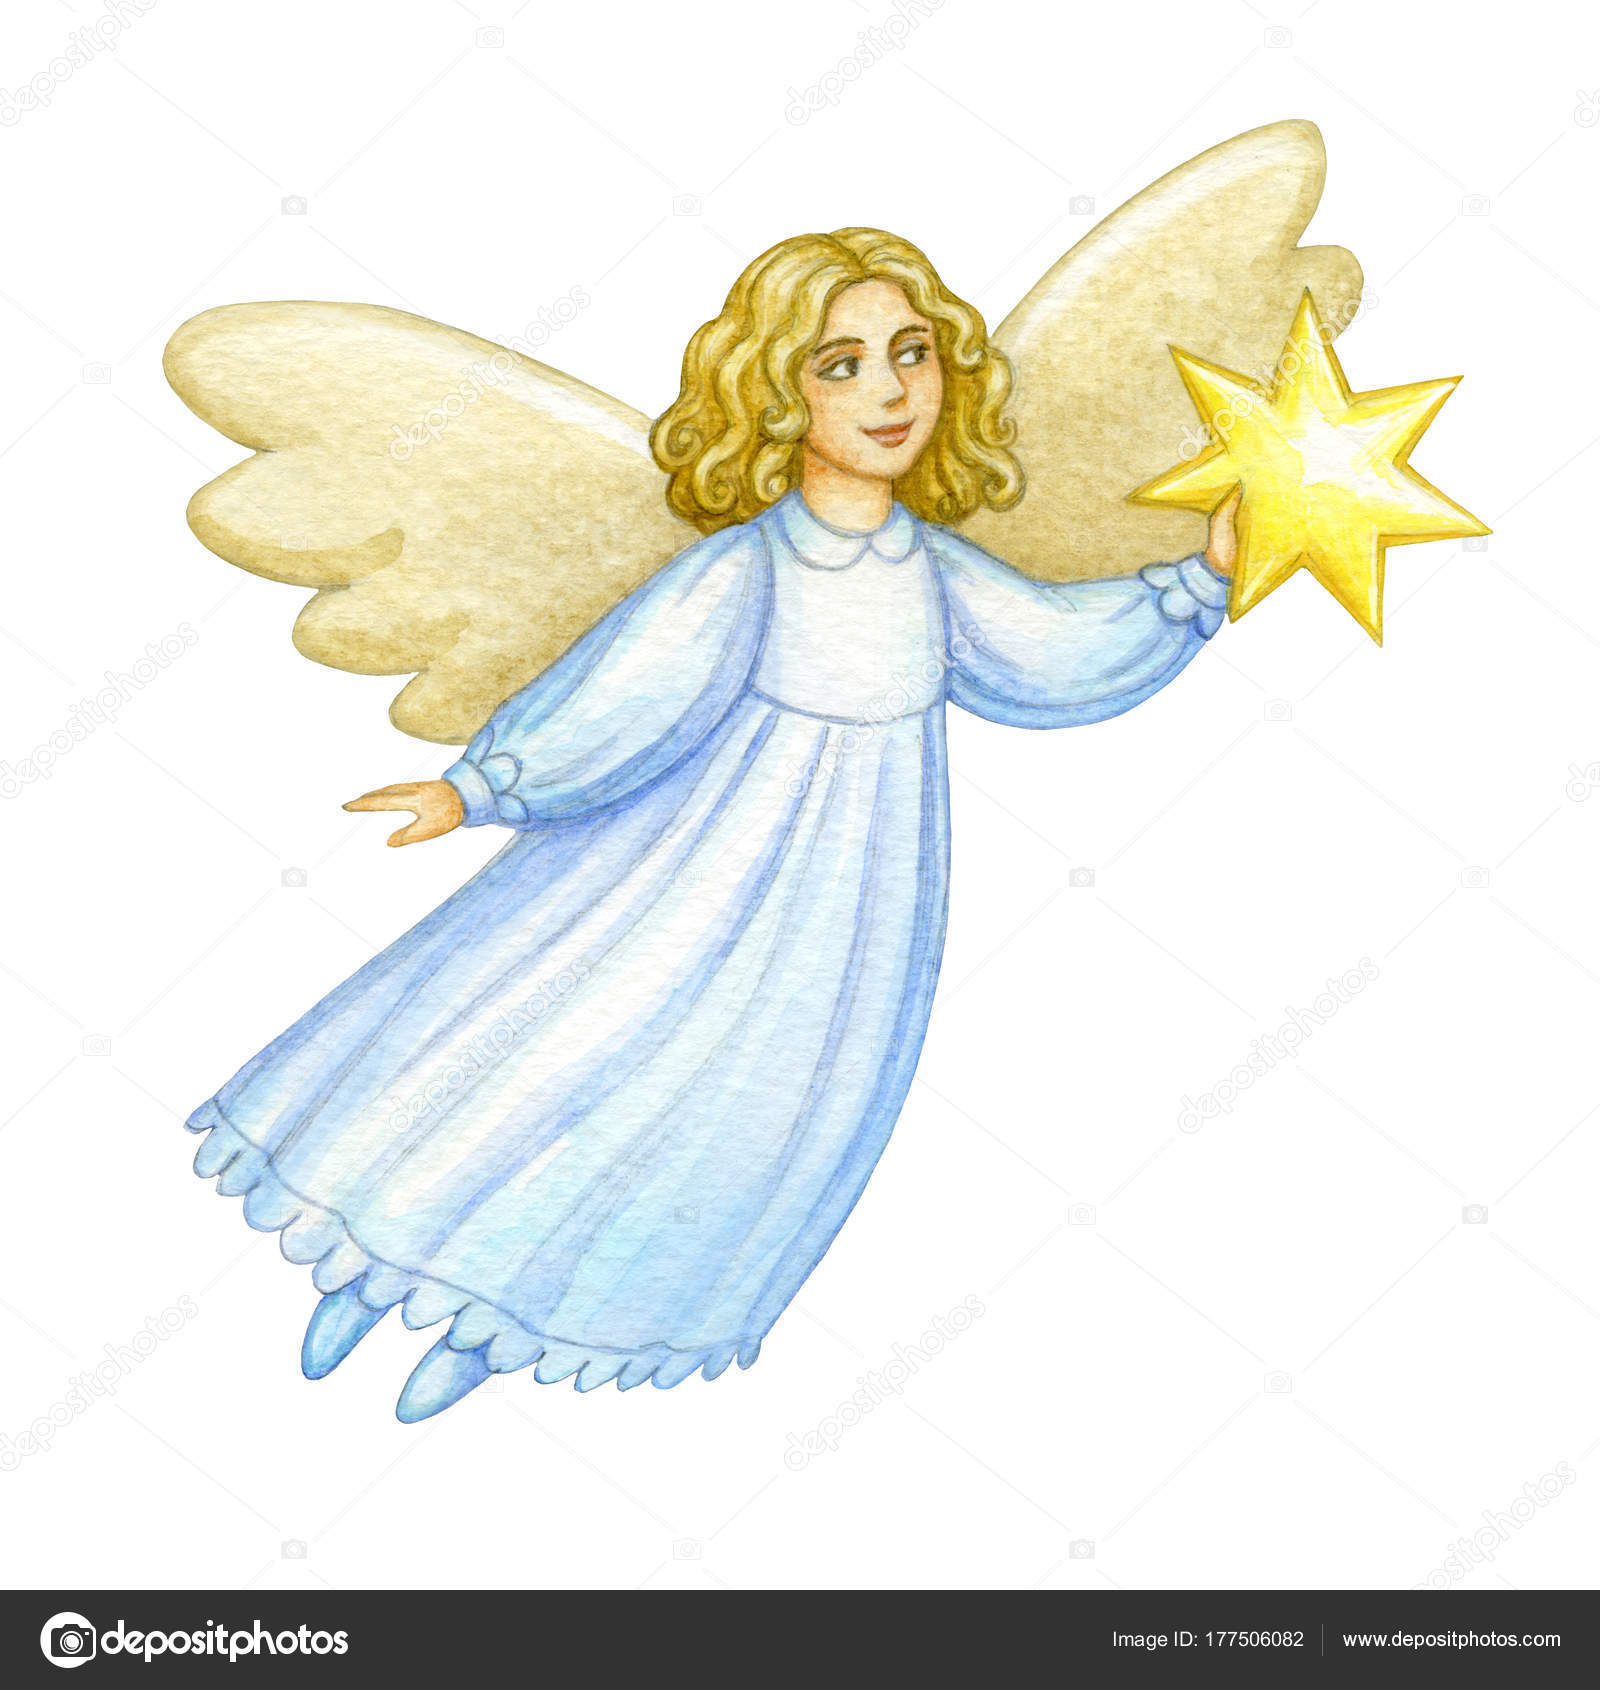 Watercolor christmas angel. — Stock Photo © alhontess.gmail.com ...